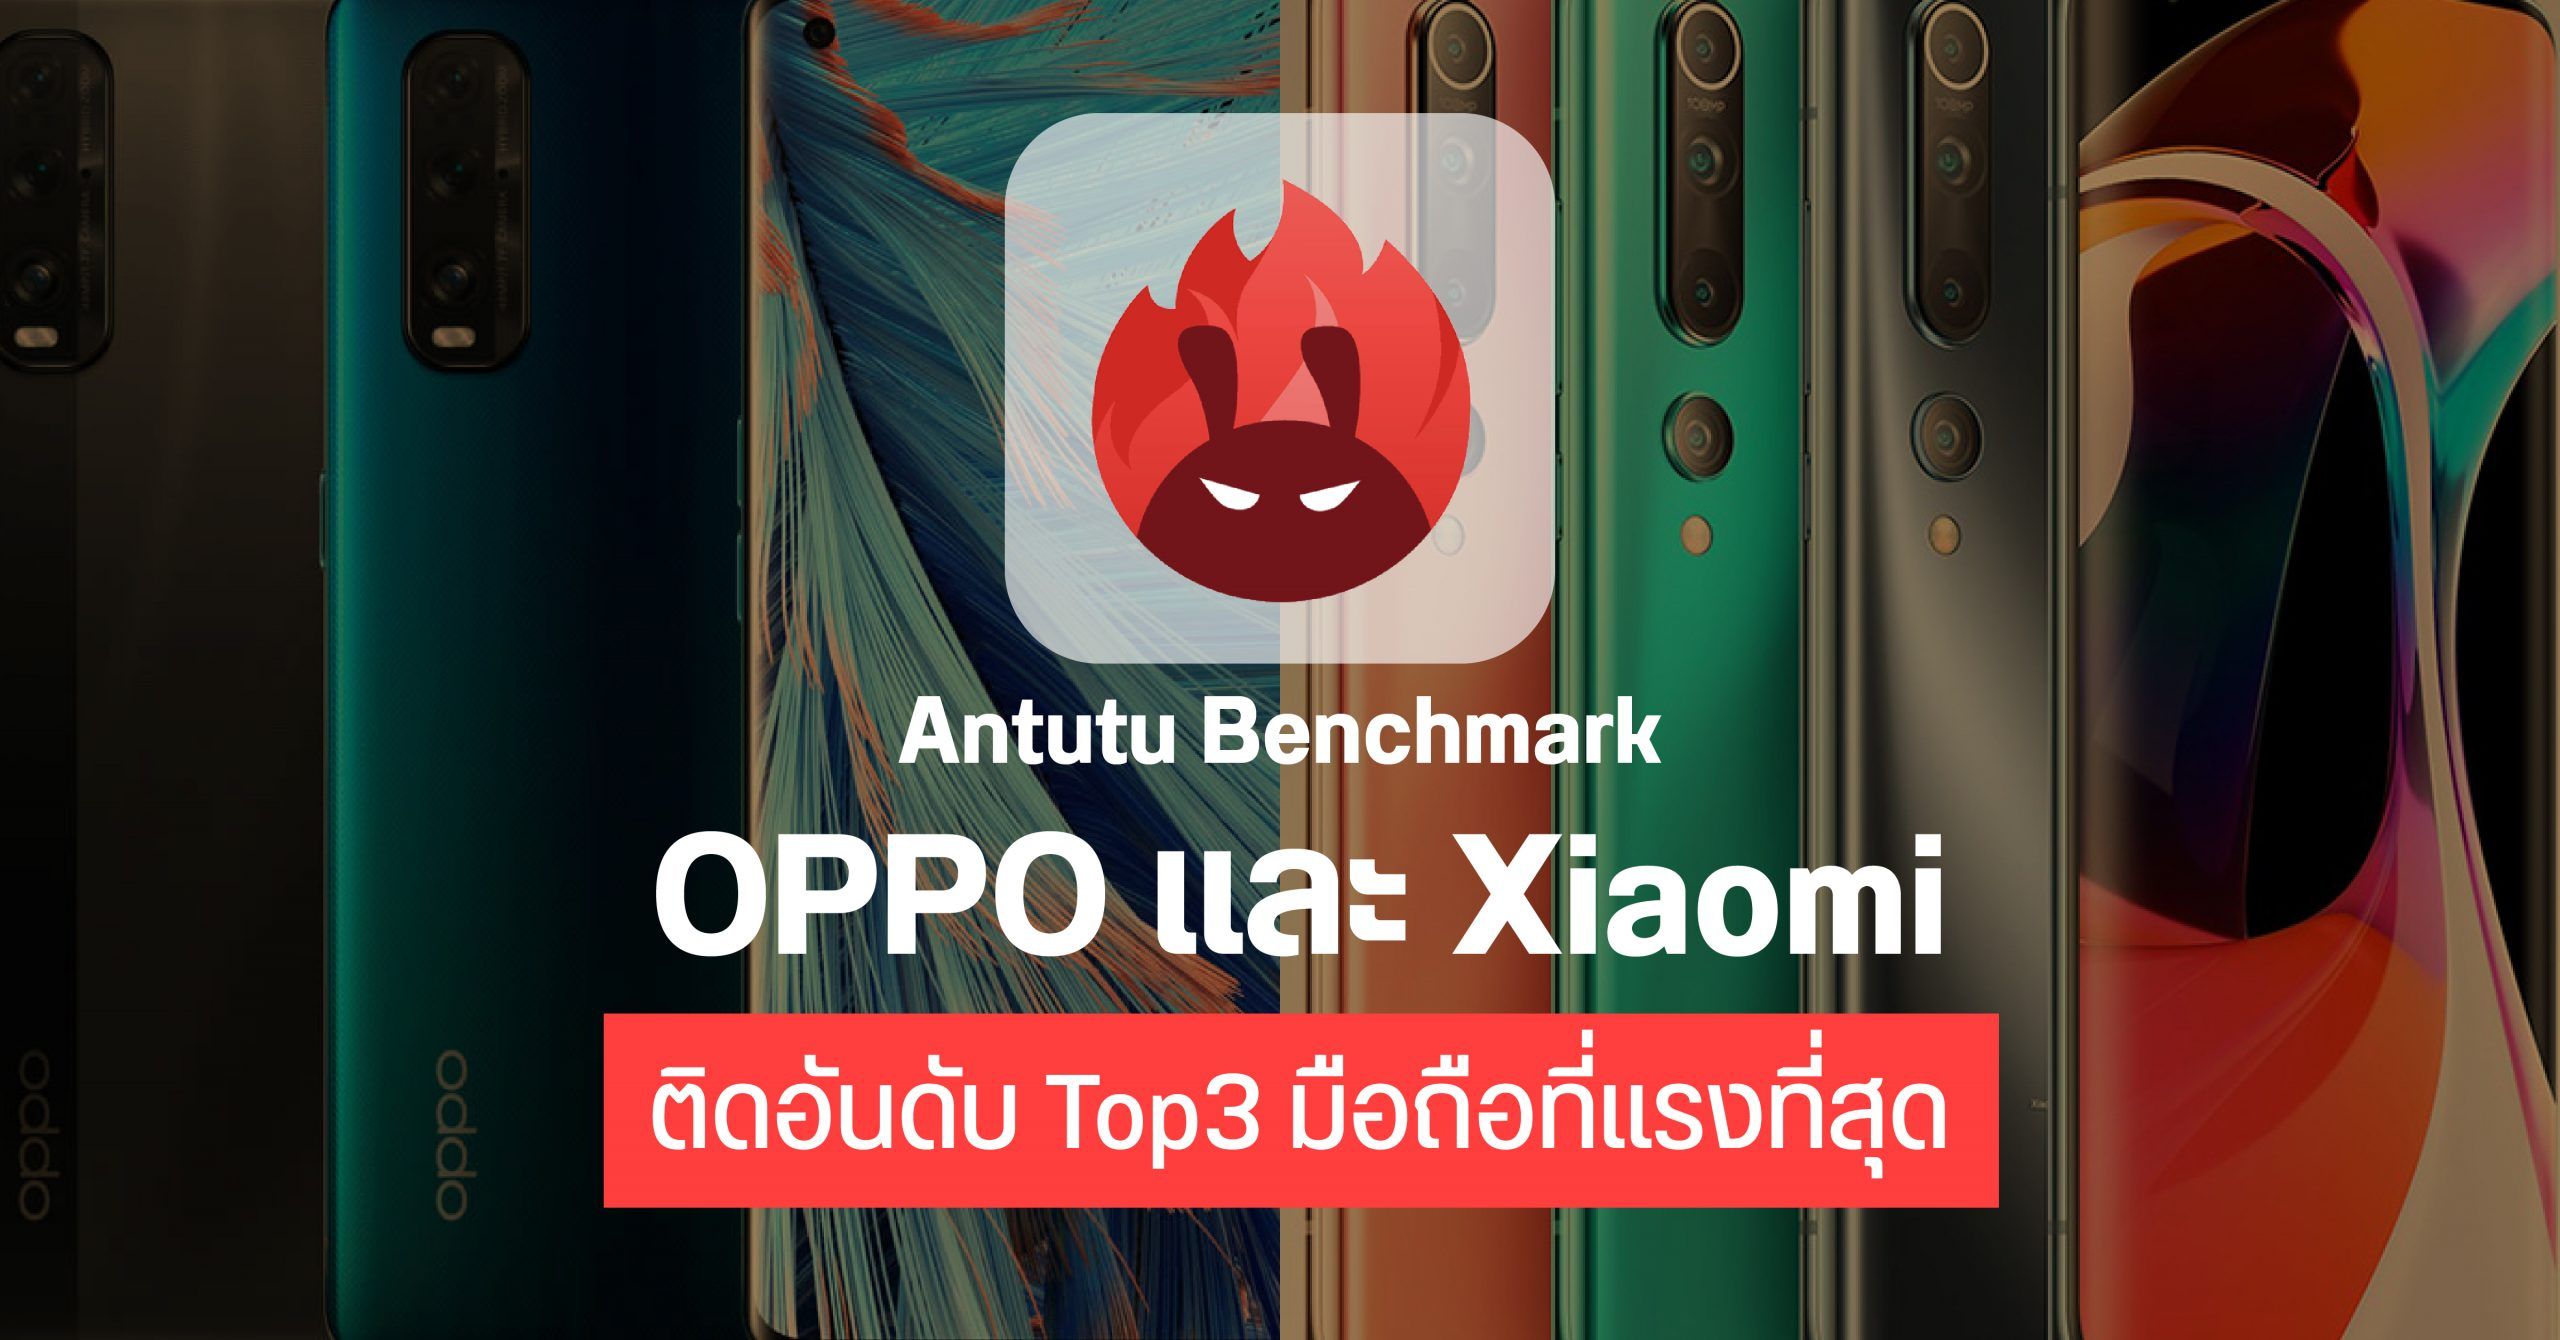 Antutu เผย 10 อันดับมือถือสุดแรงเดือนมิถุนายน 2020 พบ OPPO และ Xiaomi ติด Top 3 ทั้งระดับกลาง และเรือธง